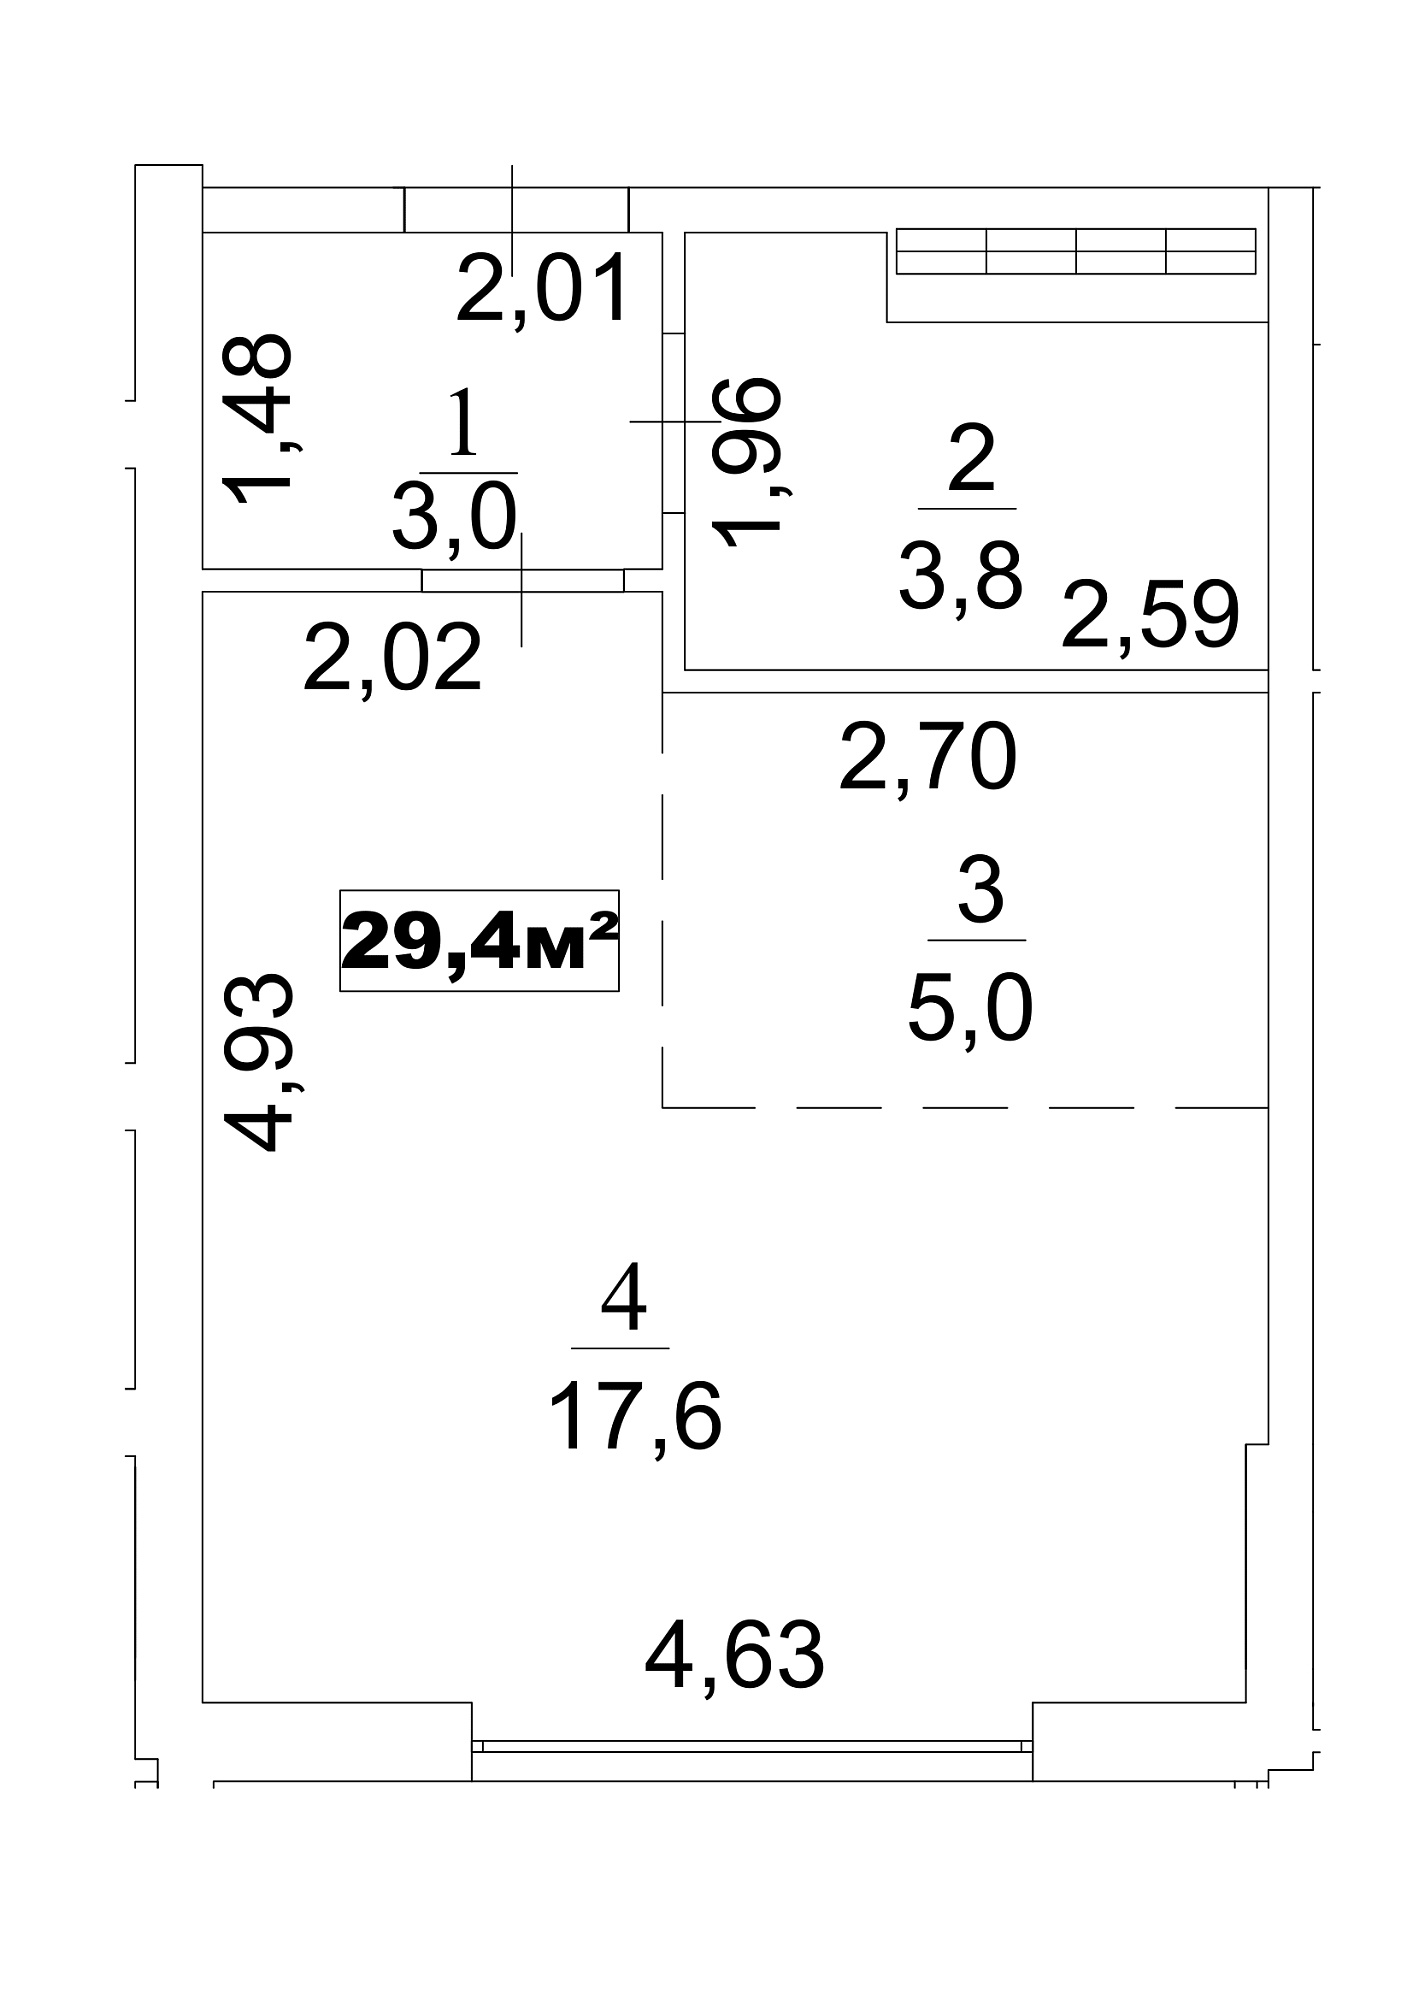 Planning Smart flats area 29.4m2, AB-13-01/00006.